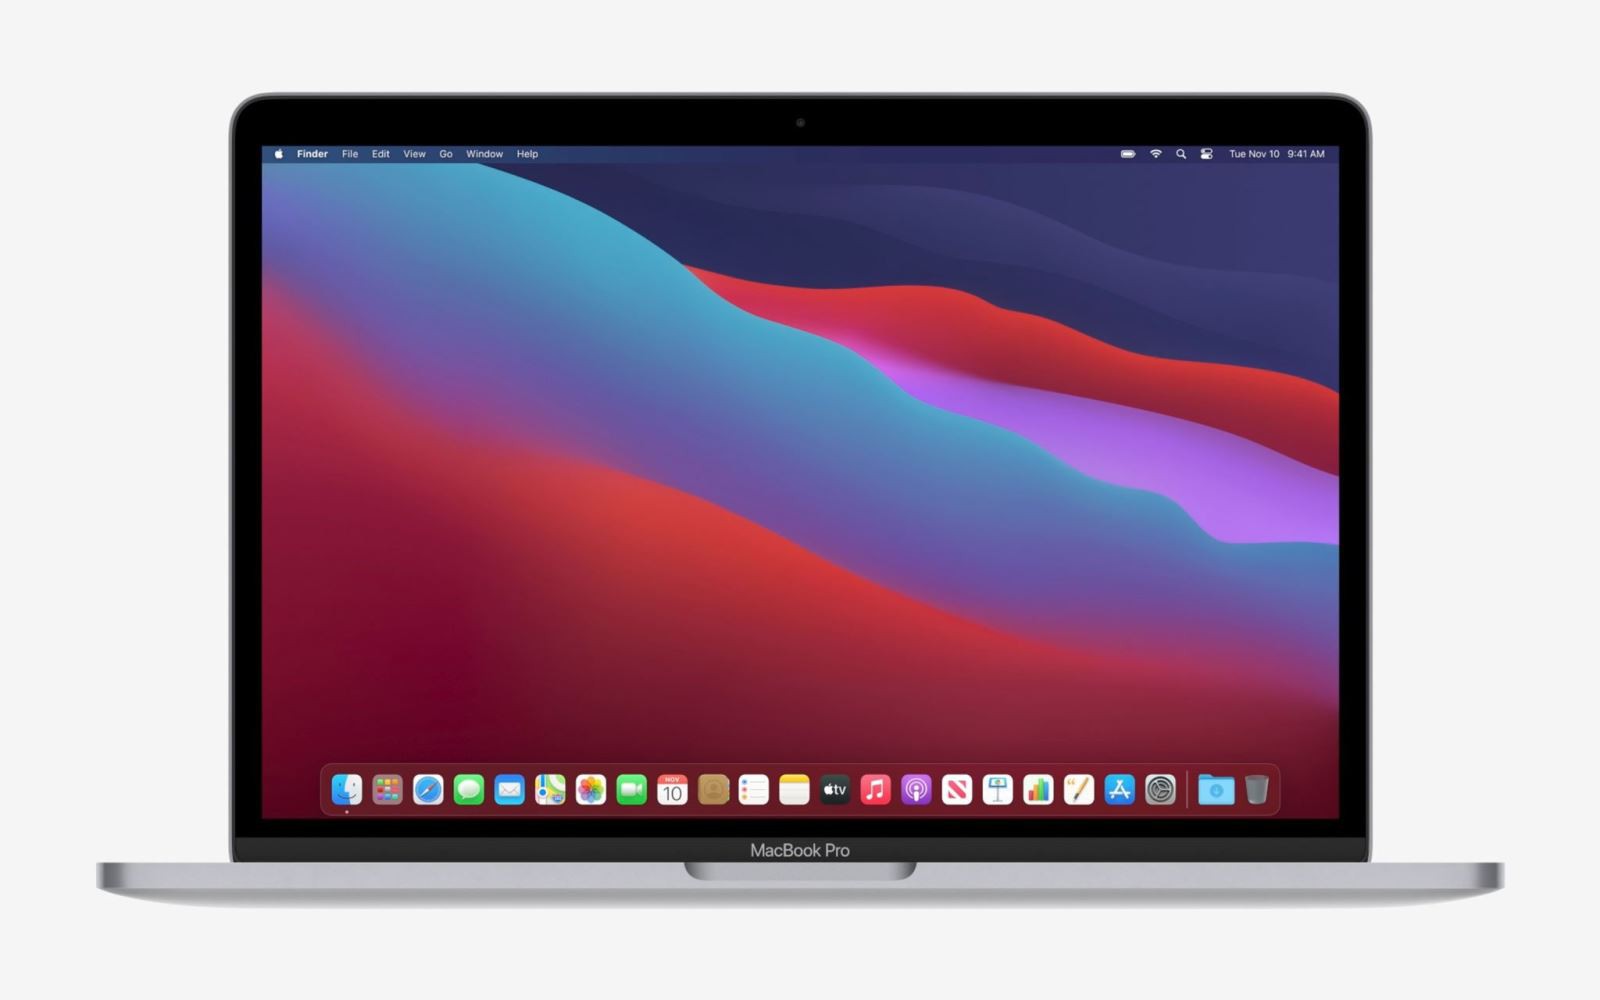 MacBook Pro 13 mới: Chip Apple M1, giá từ 1299 USD